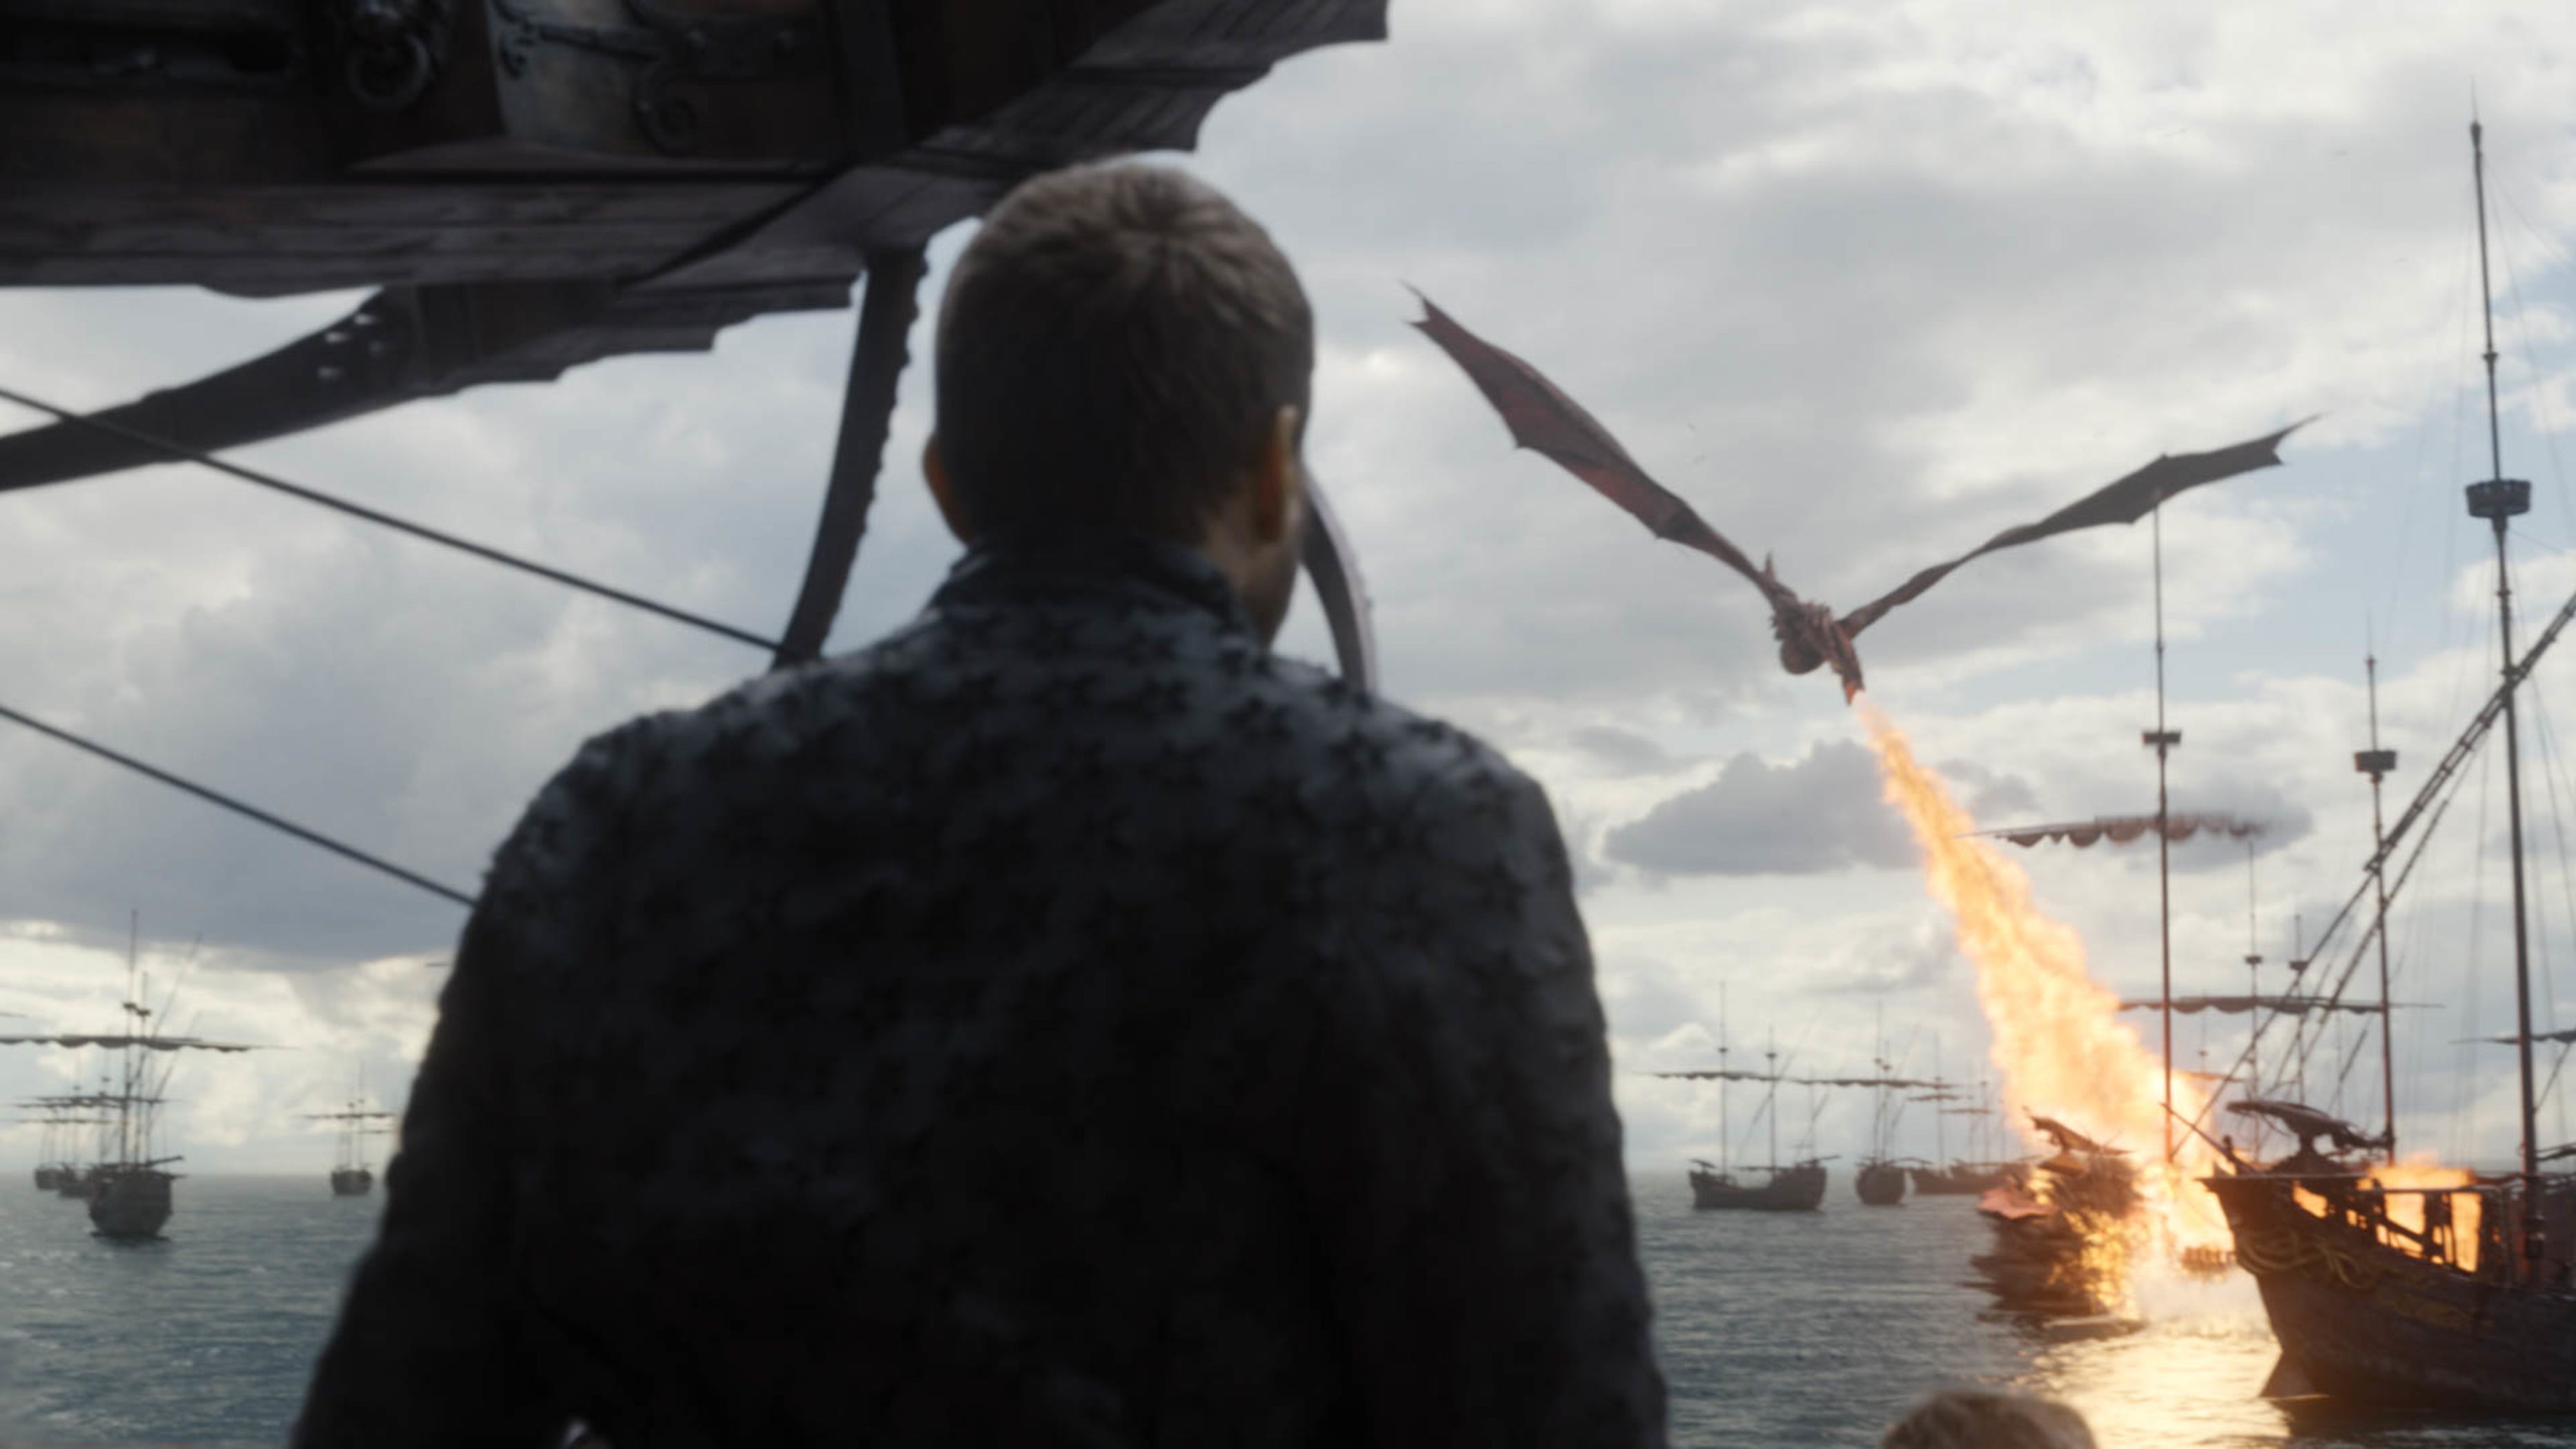 Euron Greyjoy (Pilou Asbaek) watches as Daenerys's dragon, Drogon, destroys his fleet in the penultimate episode of 'Game of Thrones.'